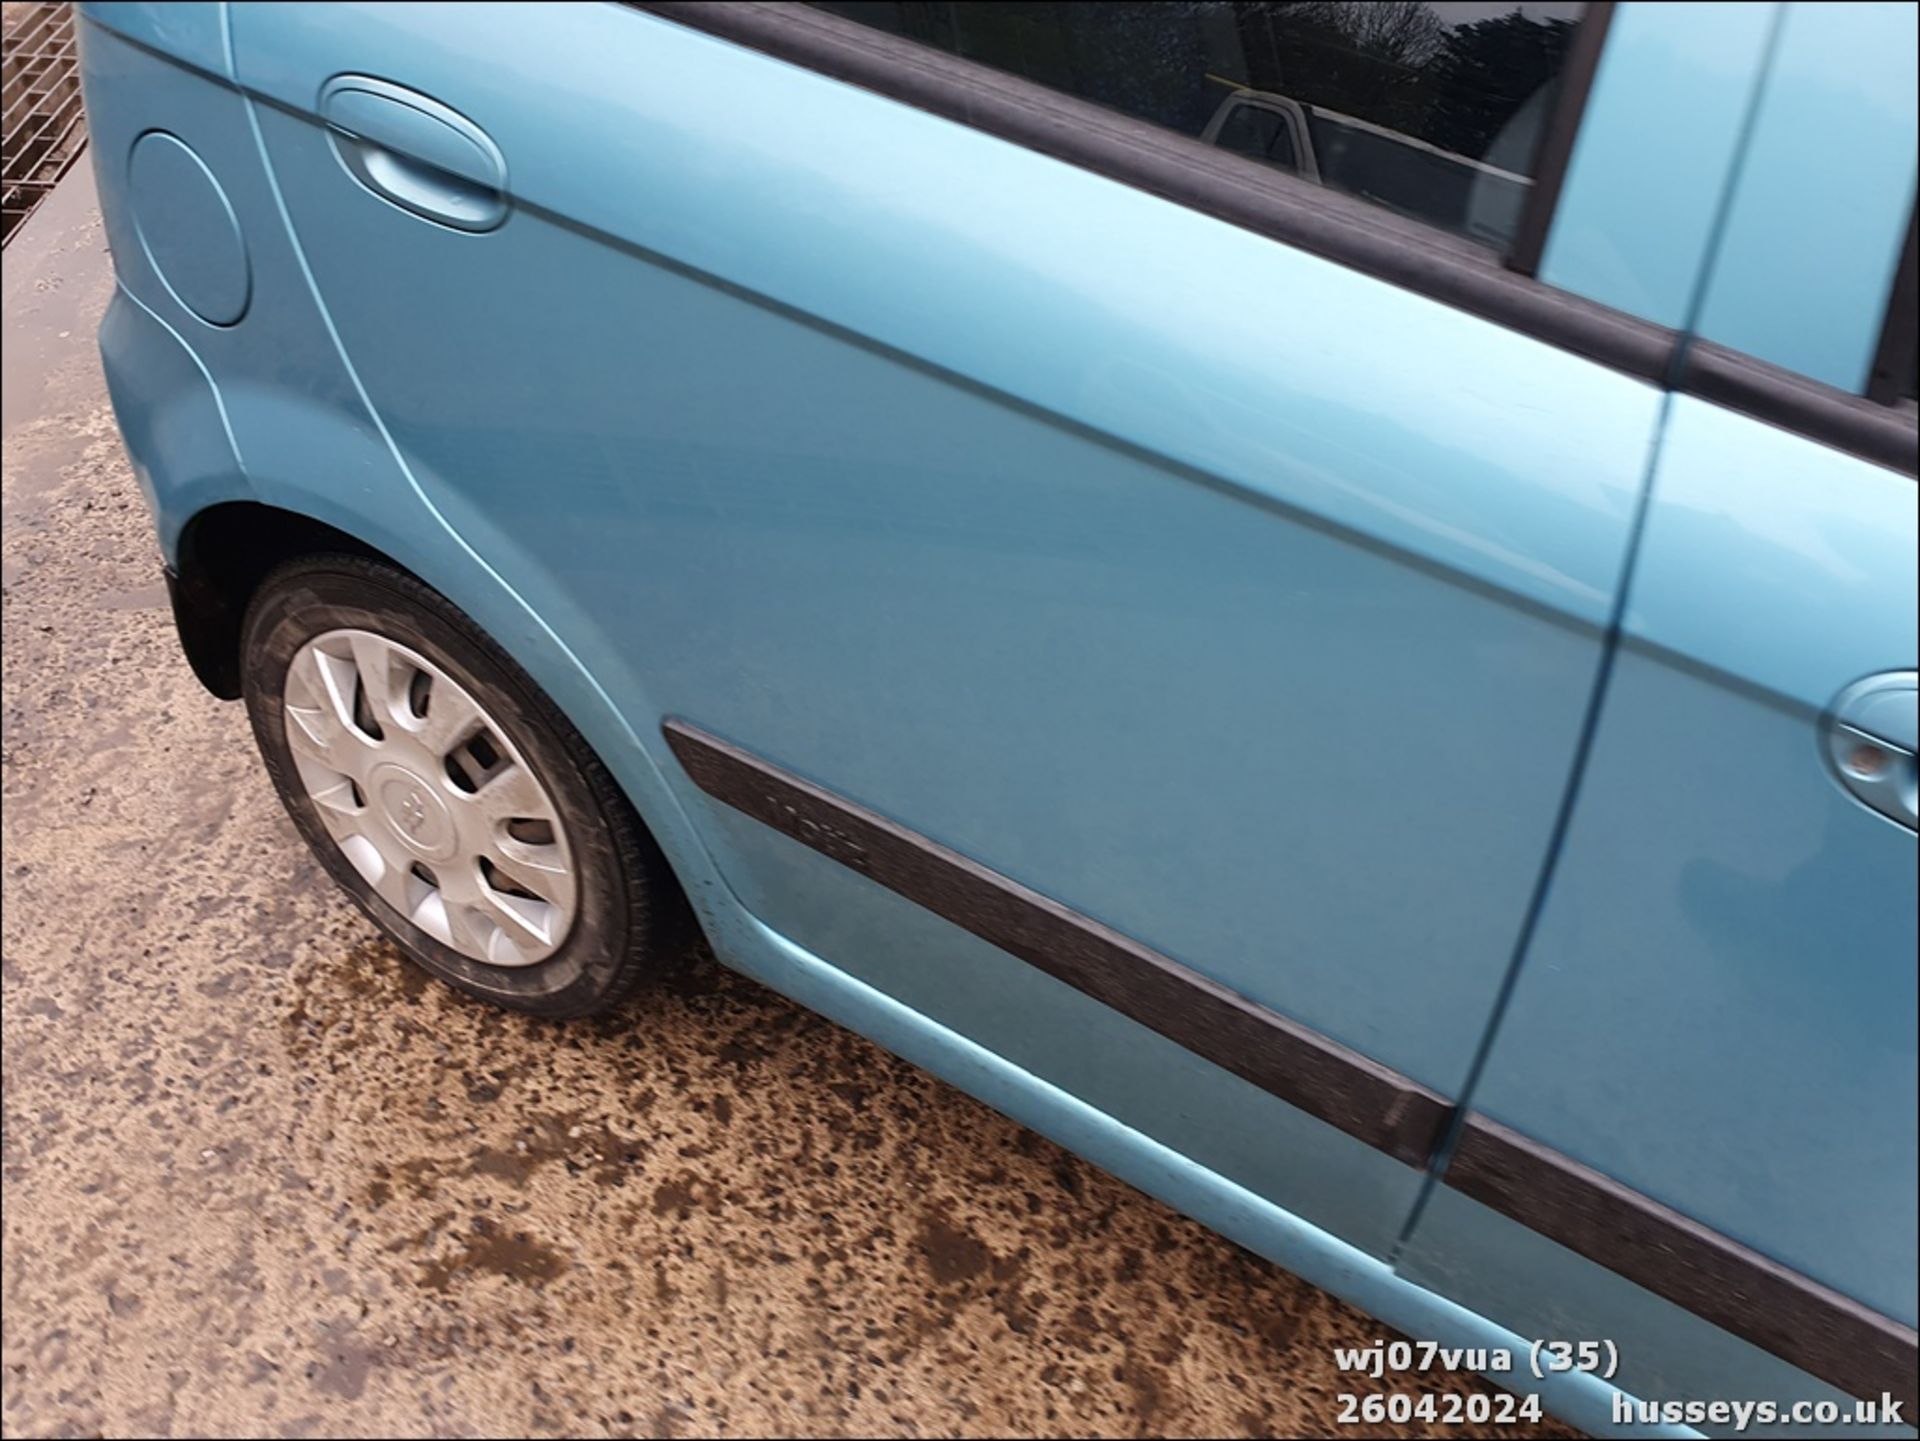 07/07 CHEVROLET MATIZ SE AUTO - 796cc 5dr Hatchback (Blue, 36k) - Image 36 of 56